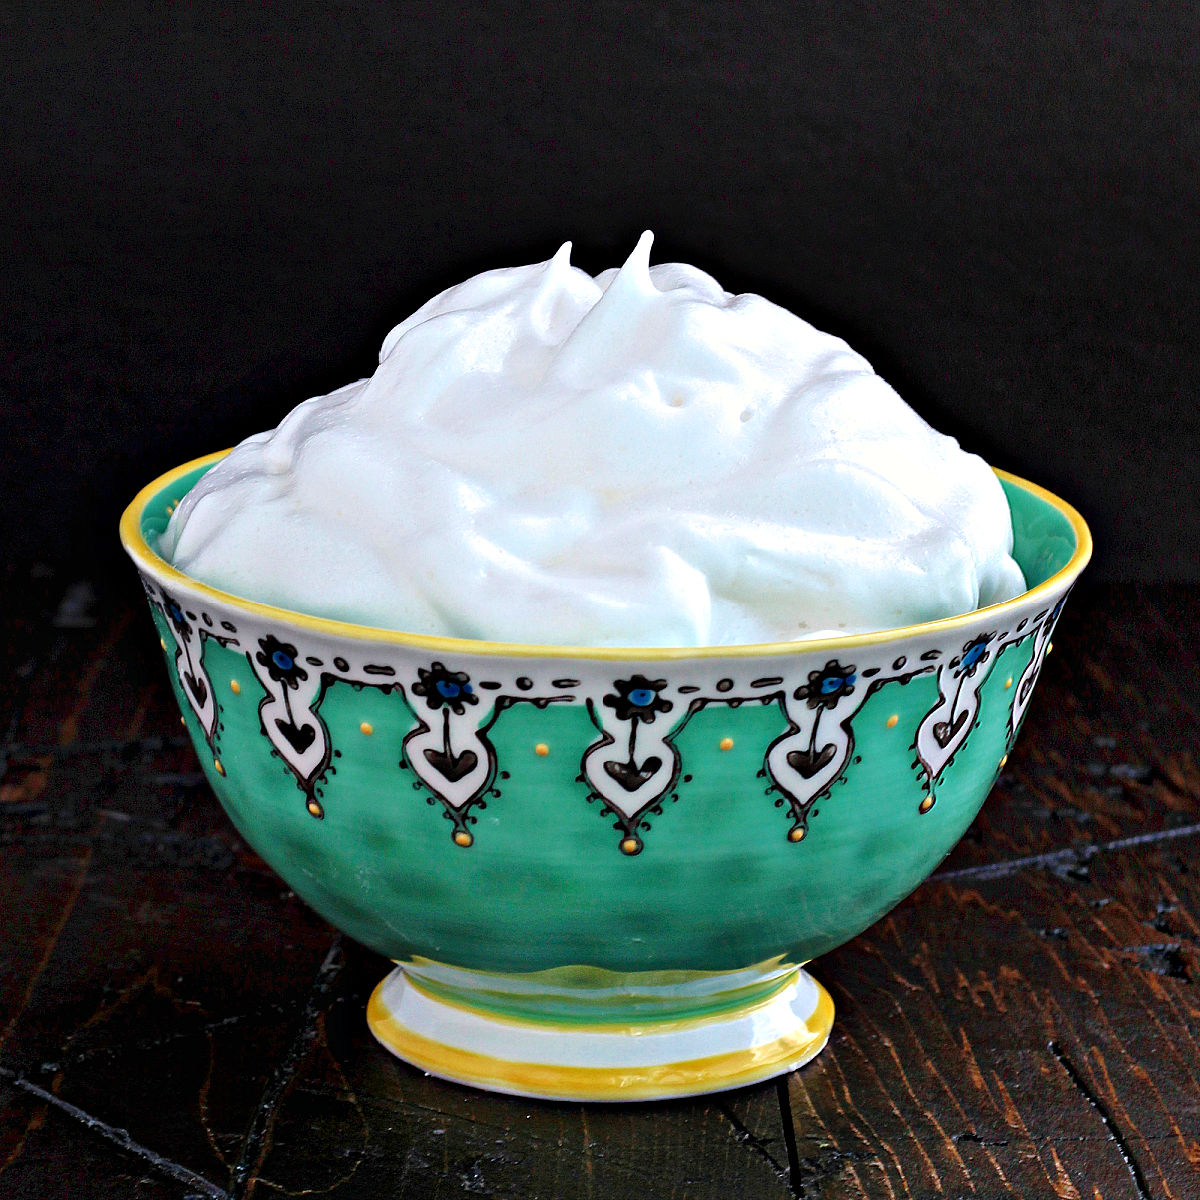 Aquafaba whipped cream in a bowl.